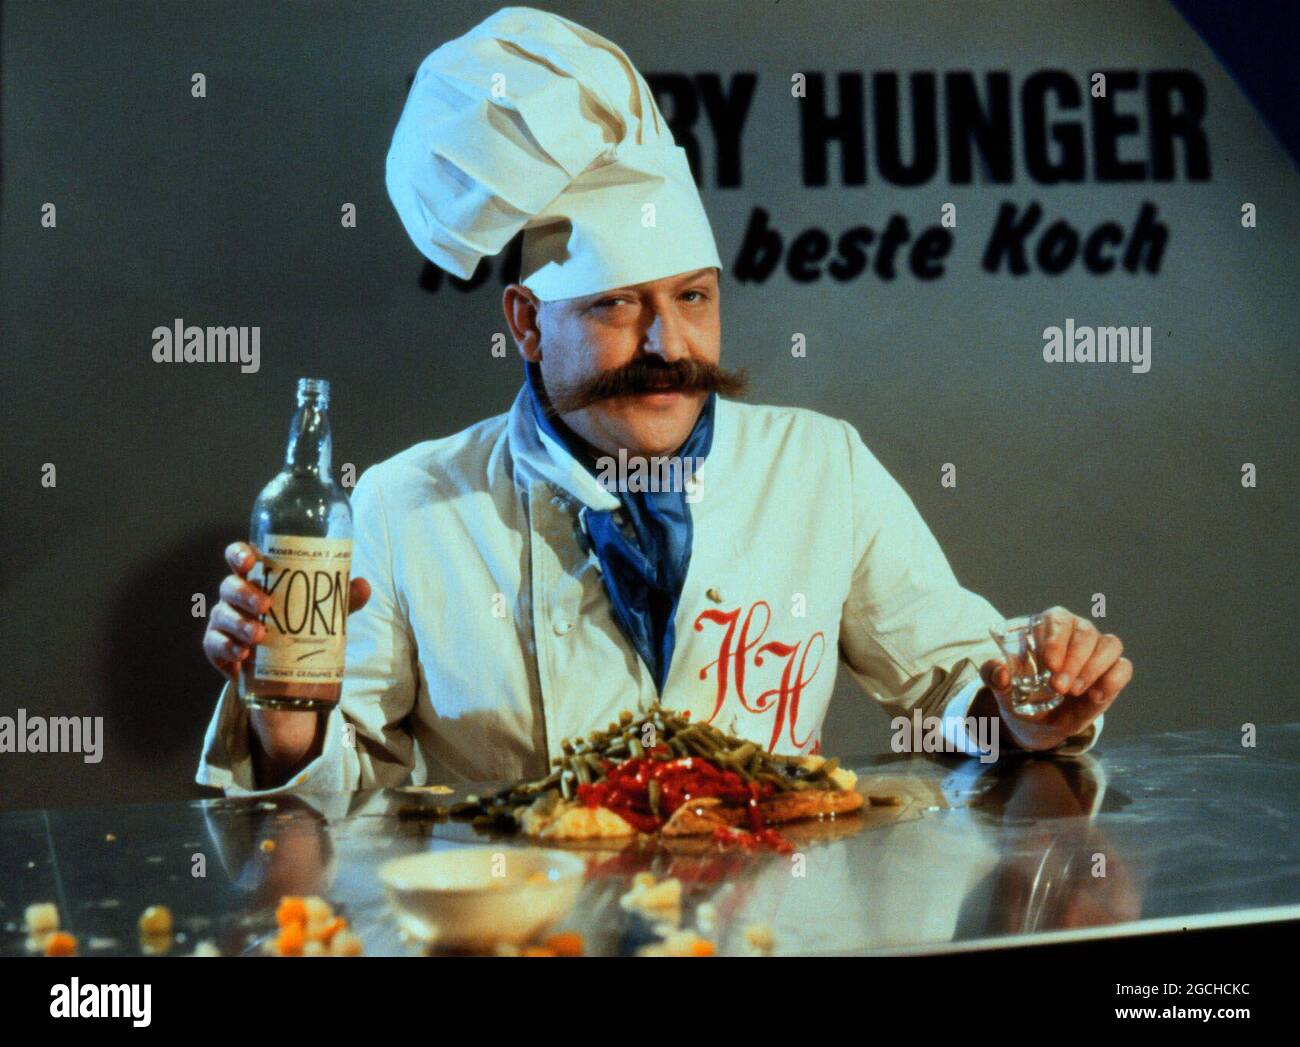 Voll daneben, ARD TV Comedy, 1990, Diether Krebs in dem Sketch: Chefkoch Harry Hunger. Voll daneben, ARD TV Comedy, 1990, Diether Krebs as Chef Harry Hunger. Stock Photo